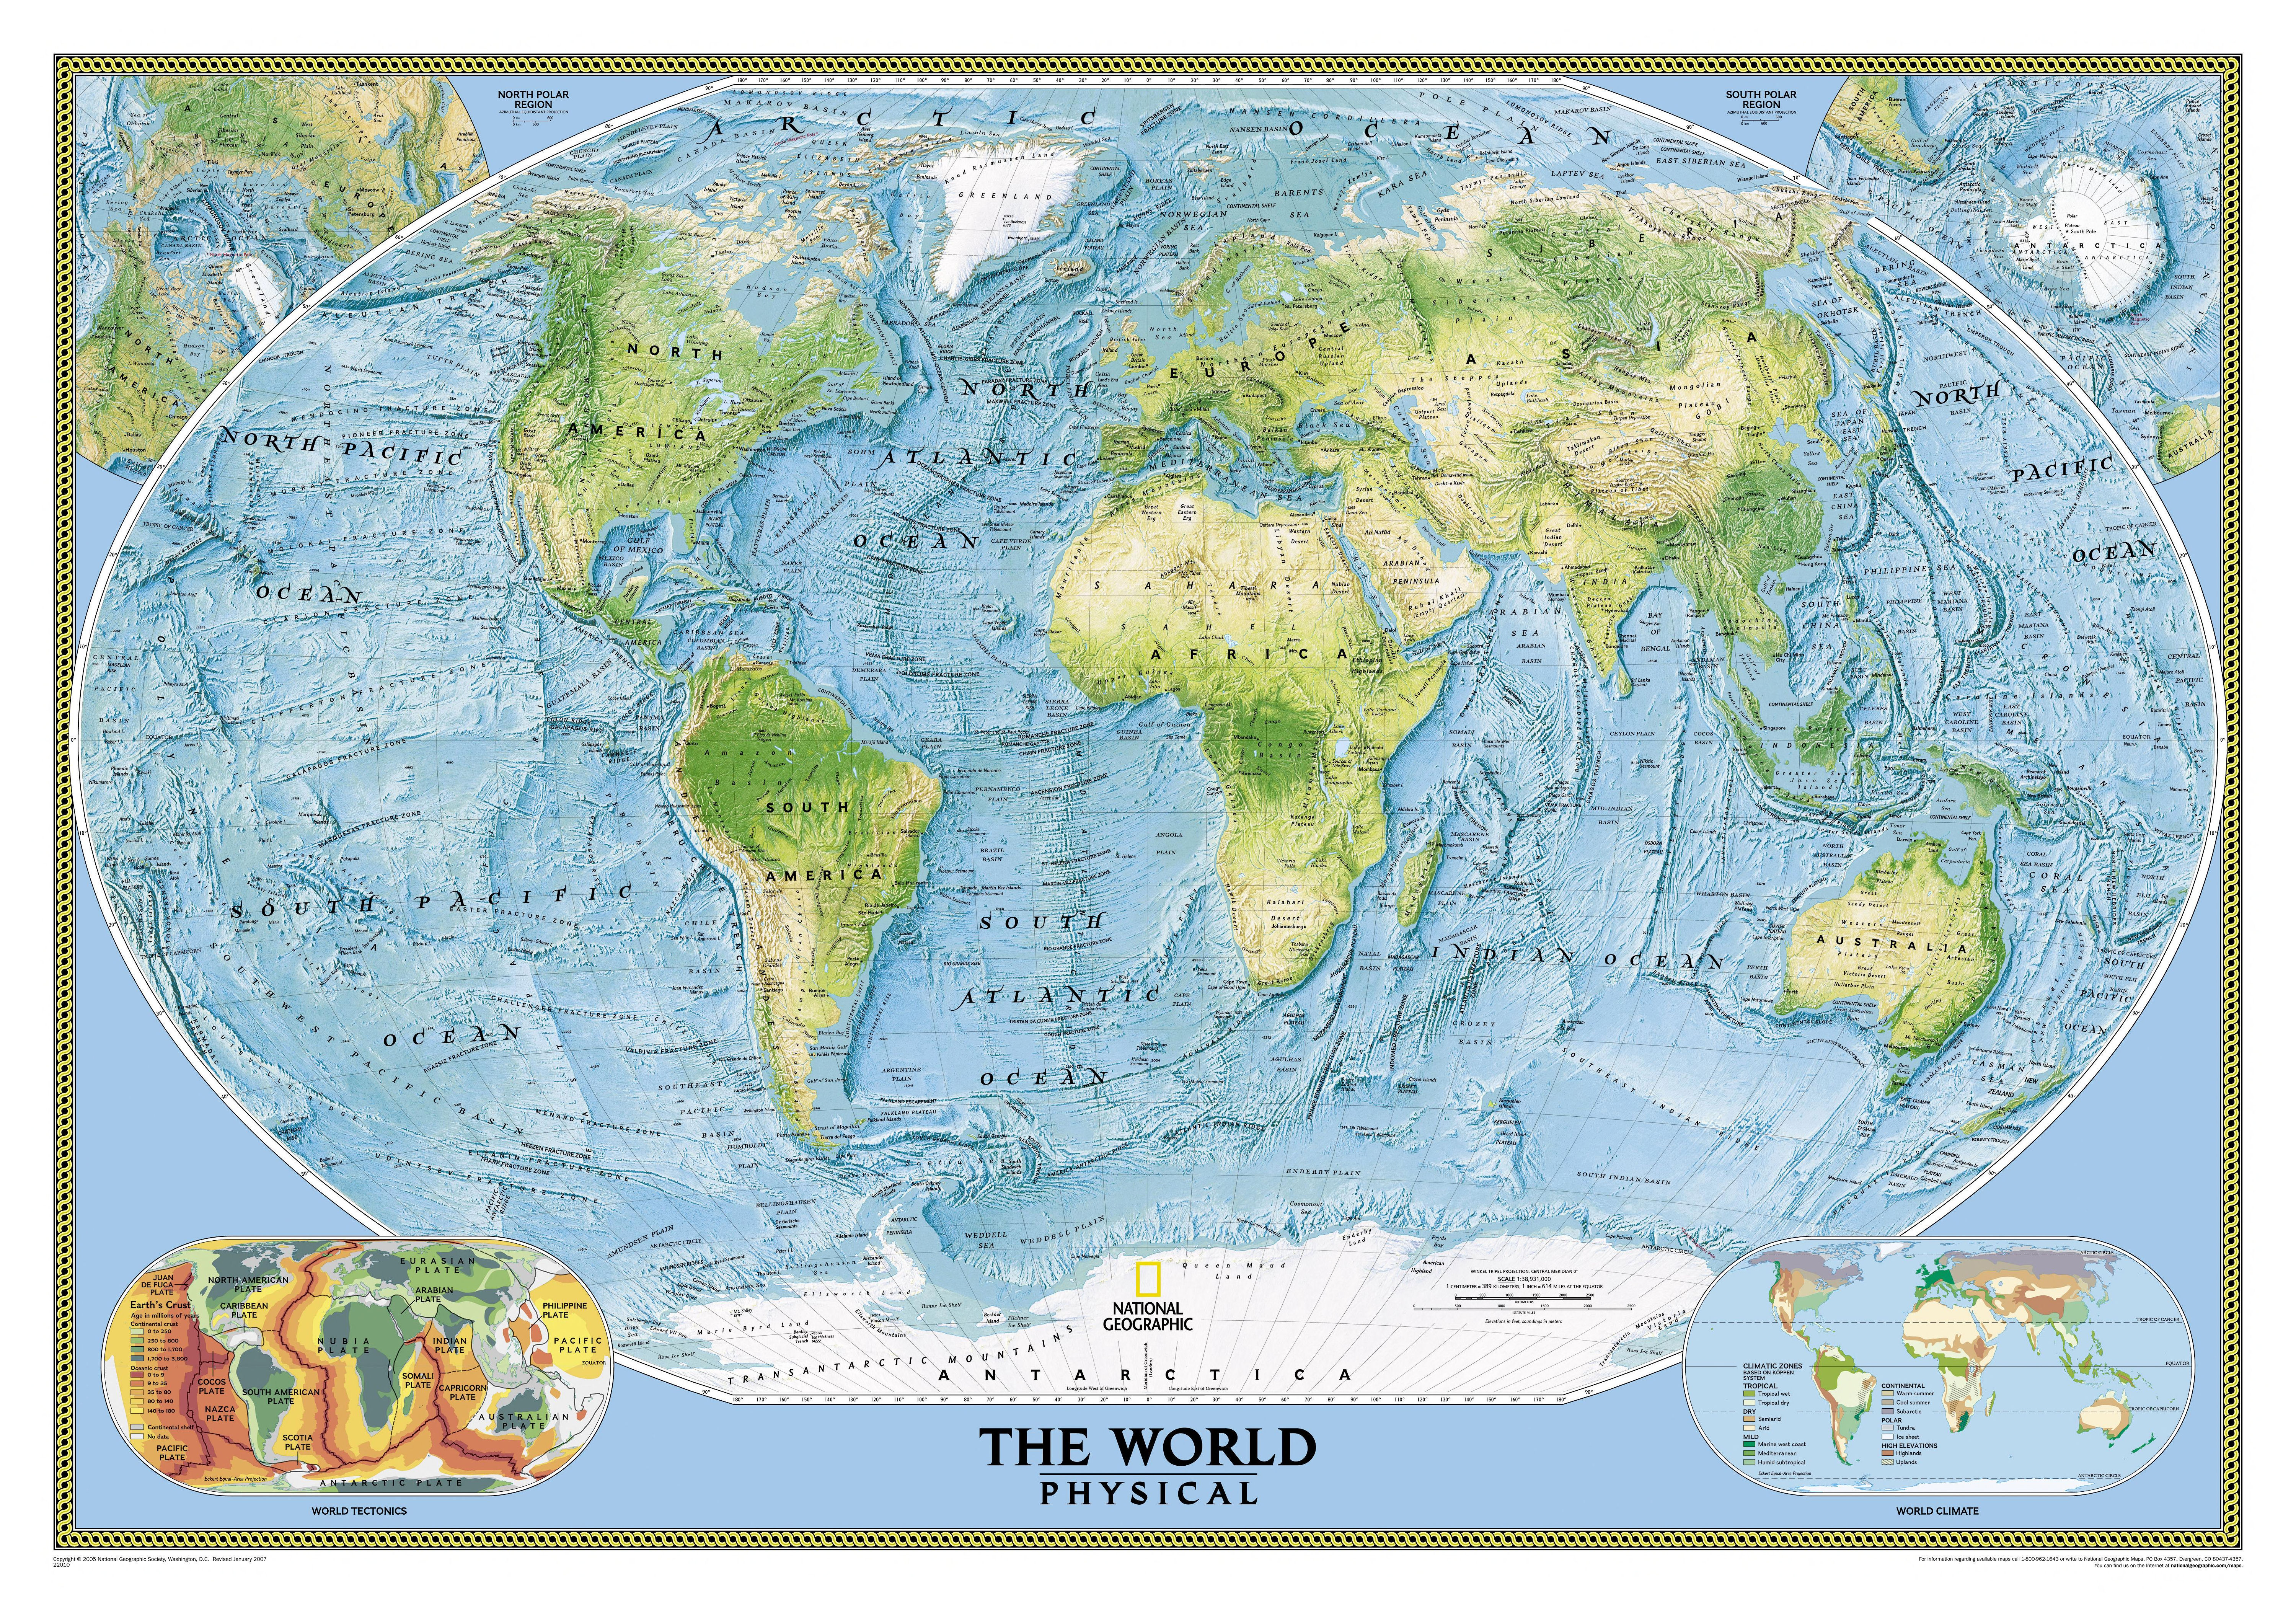 Mapa Świata - World Map - Physical 2005.jpg